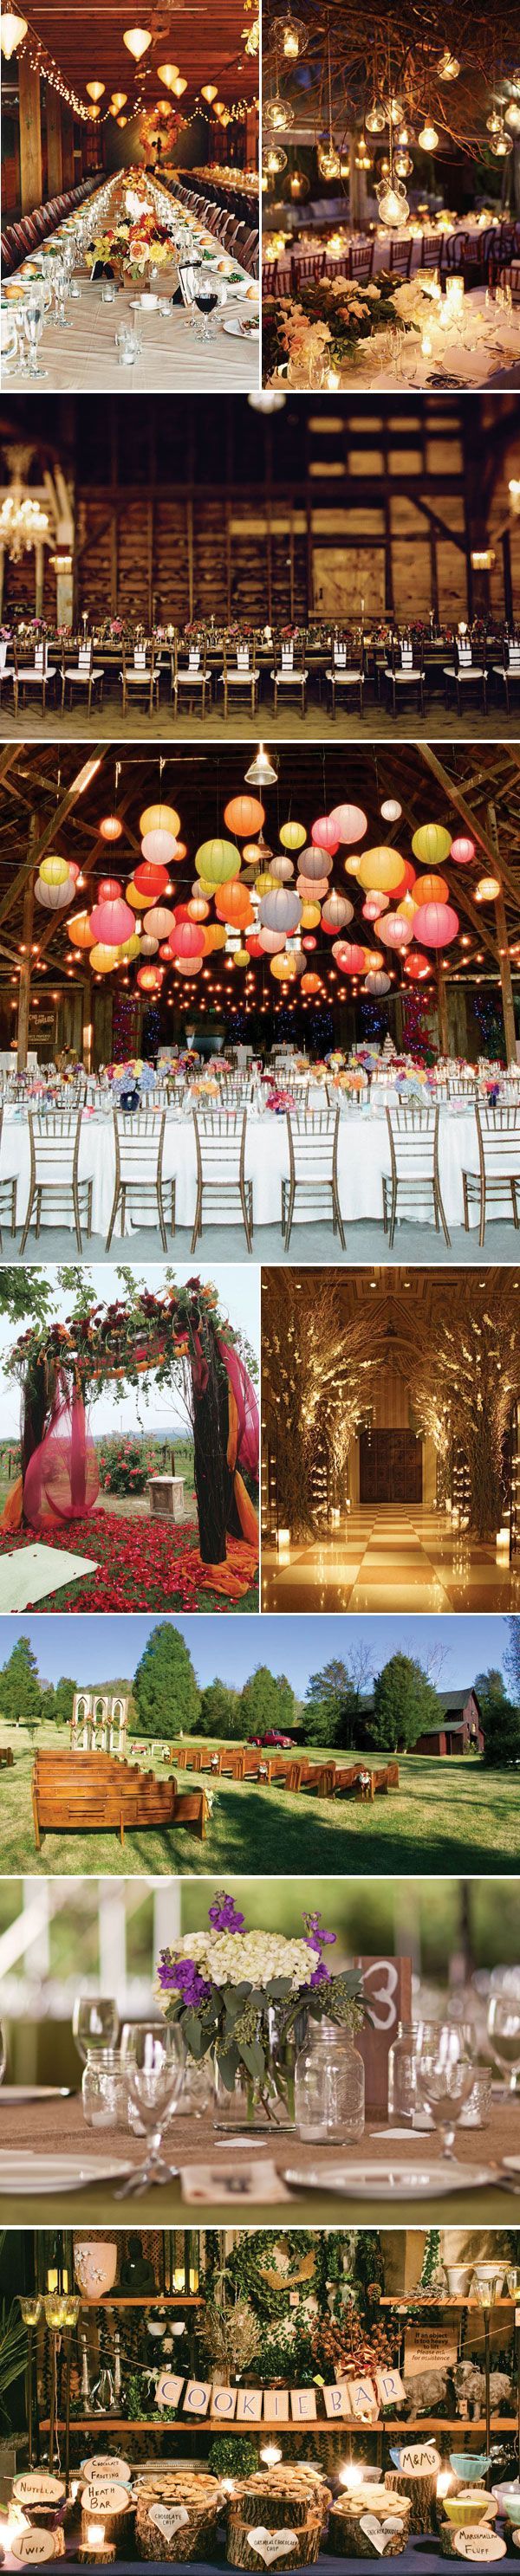 vintage wedding decor style…rustic, vintage, high drama, pure romance, and whi